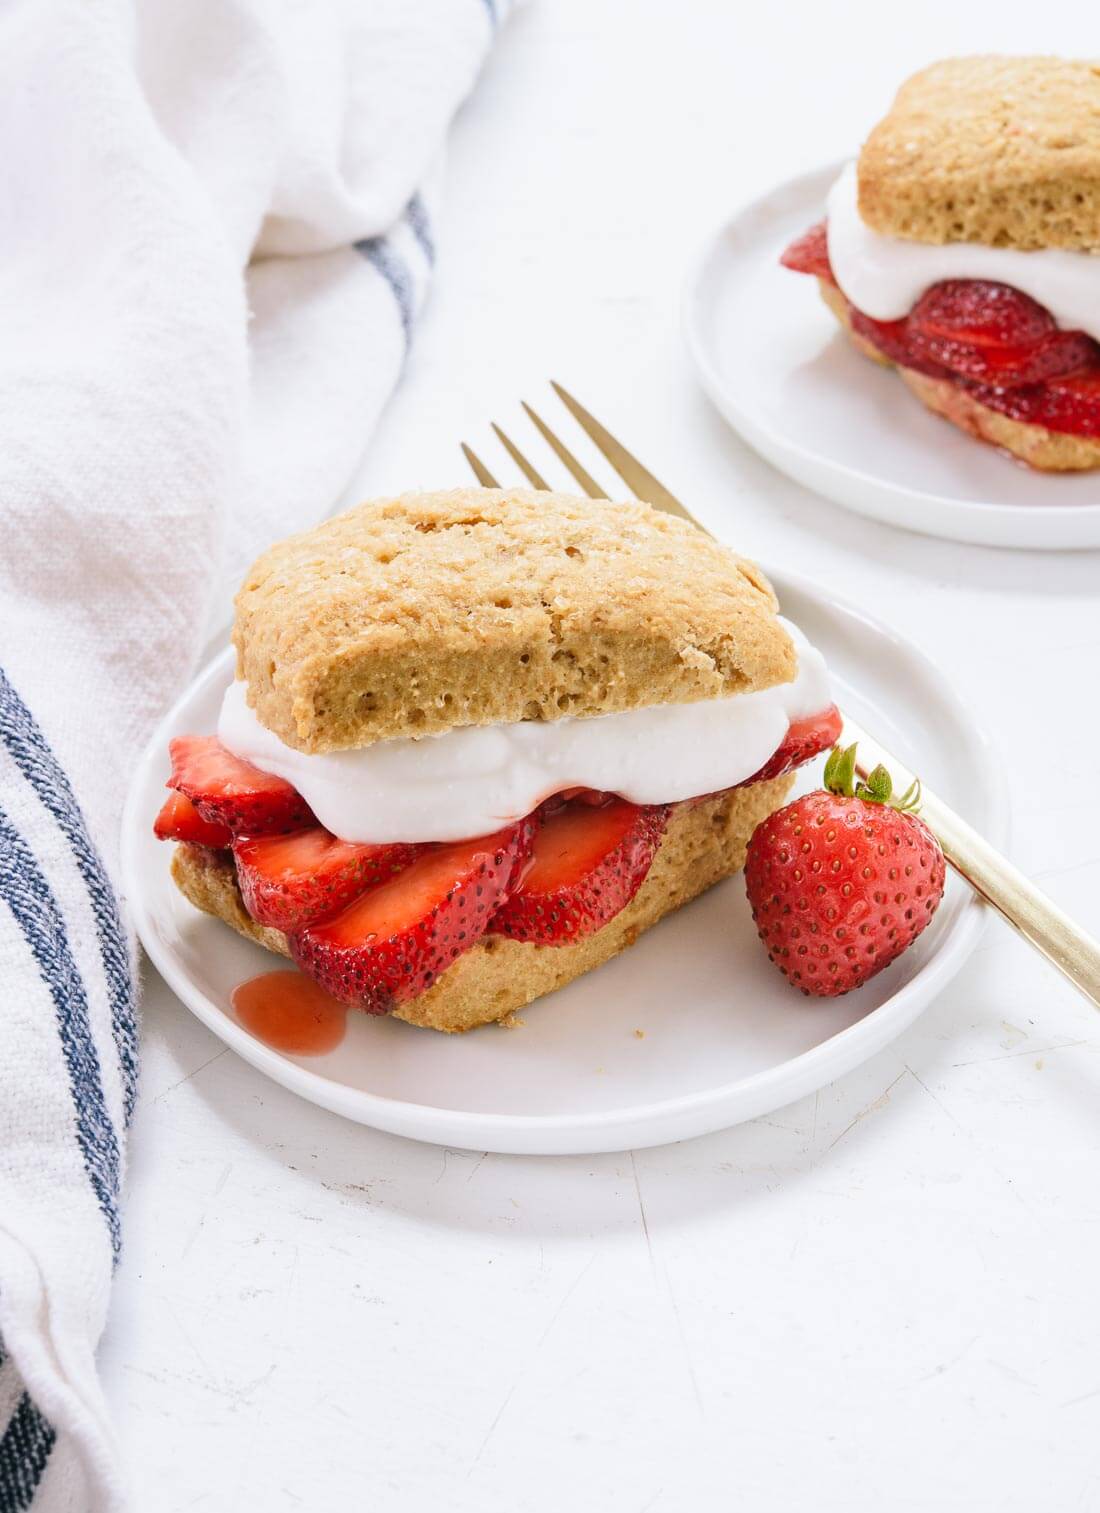 healthy strawberry shortcake